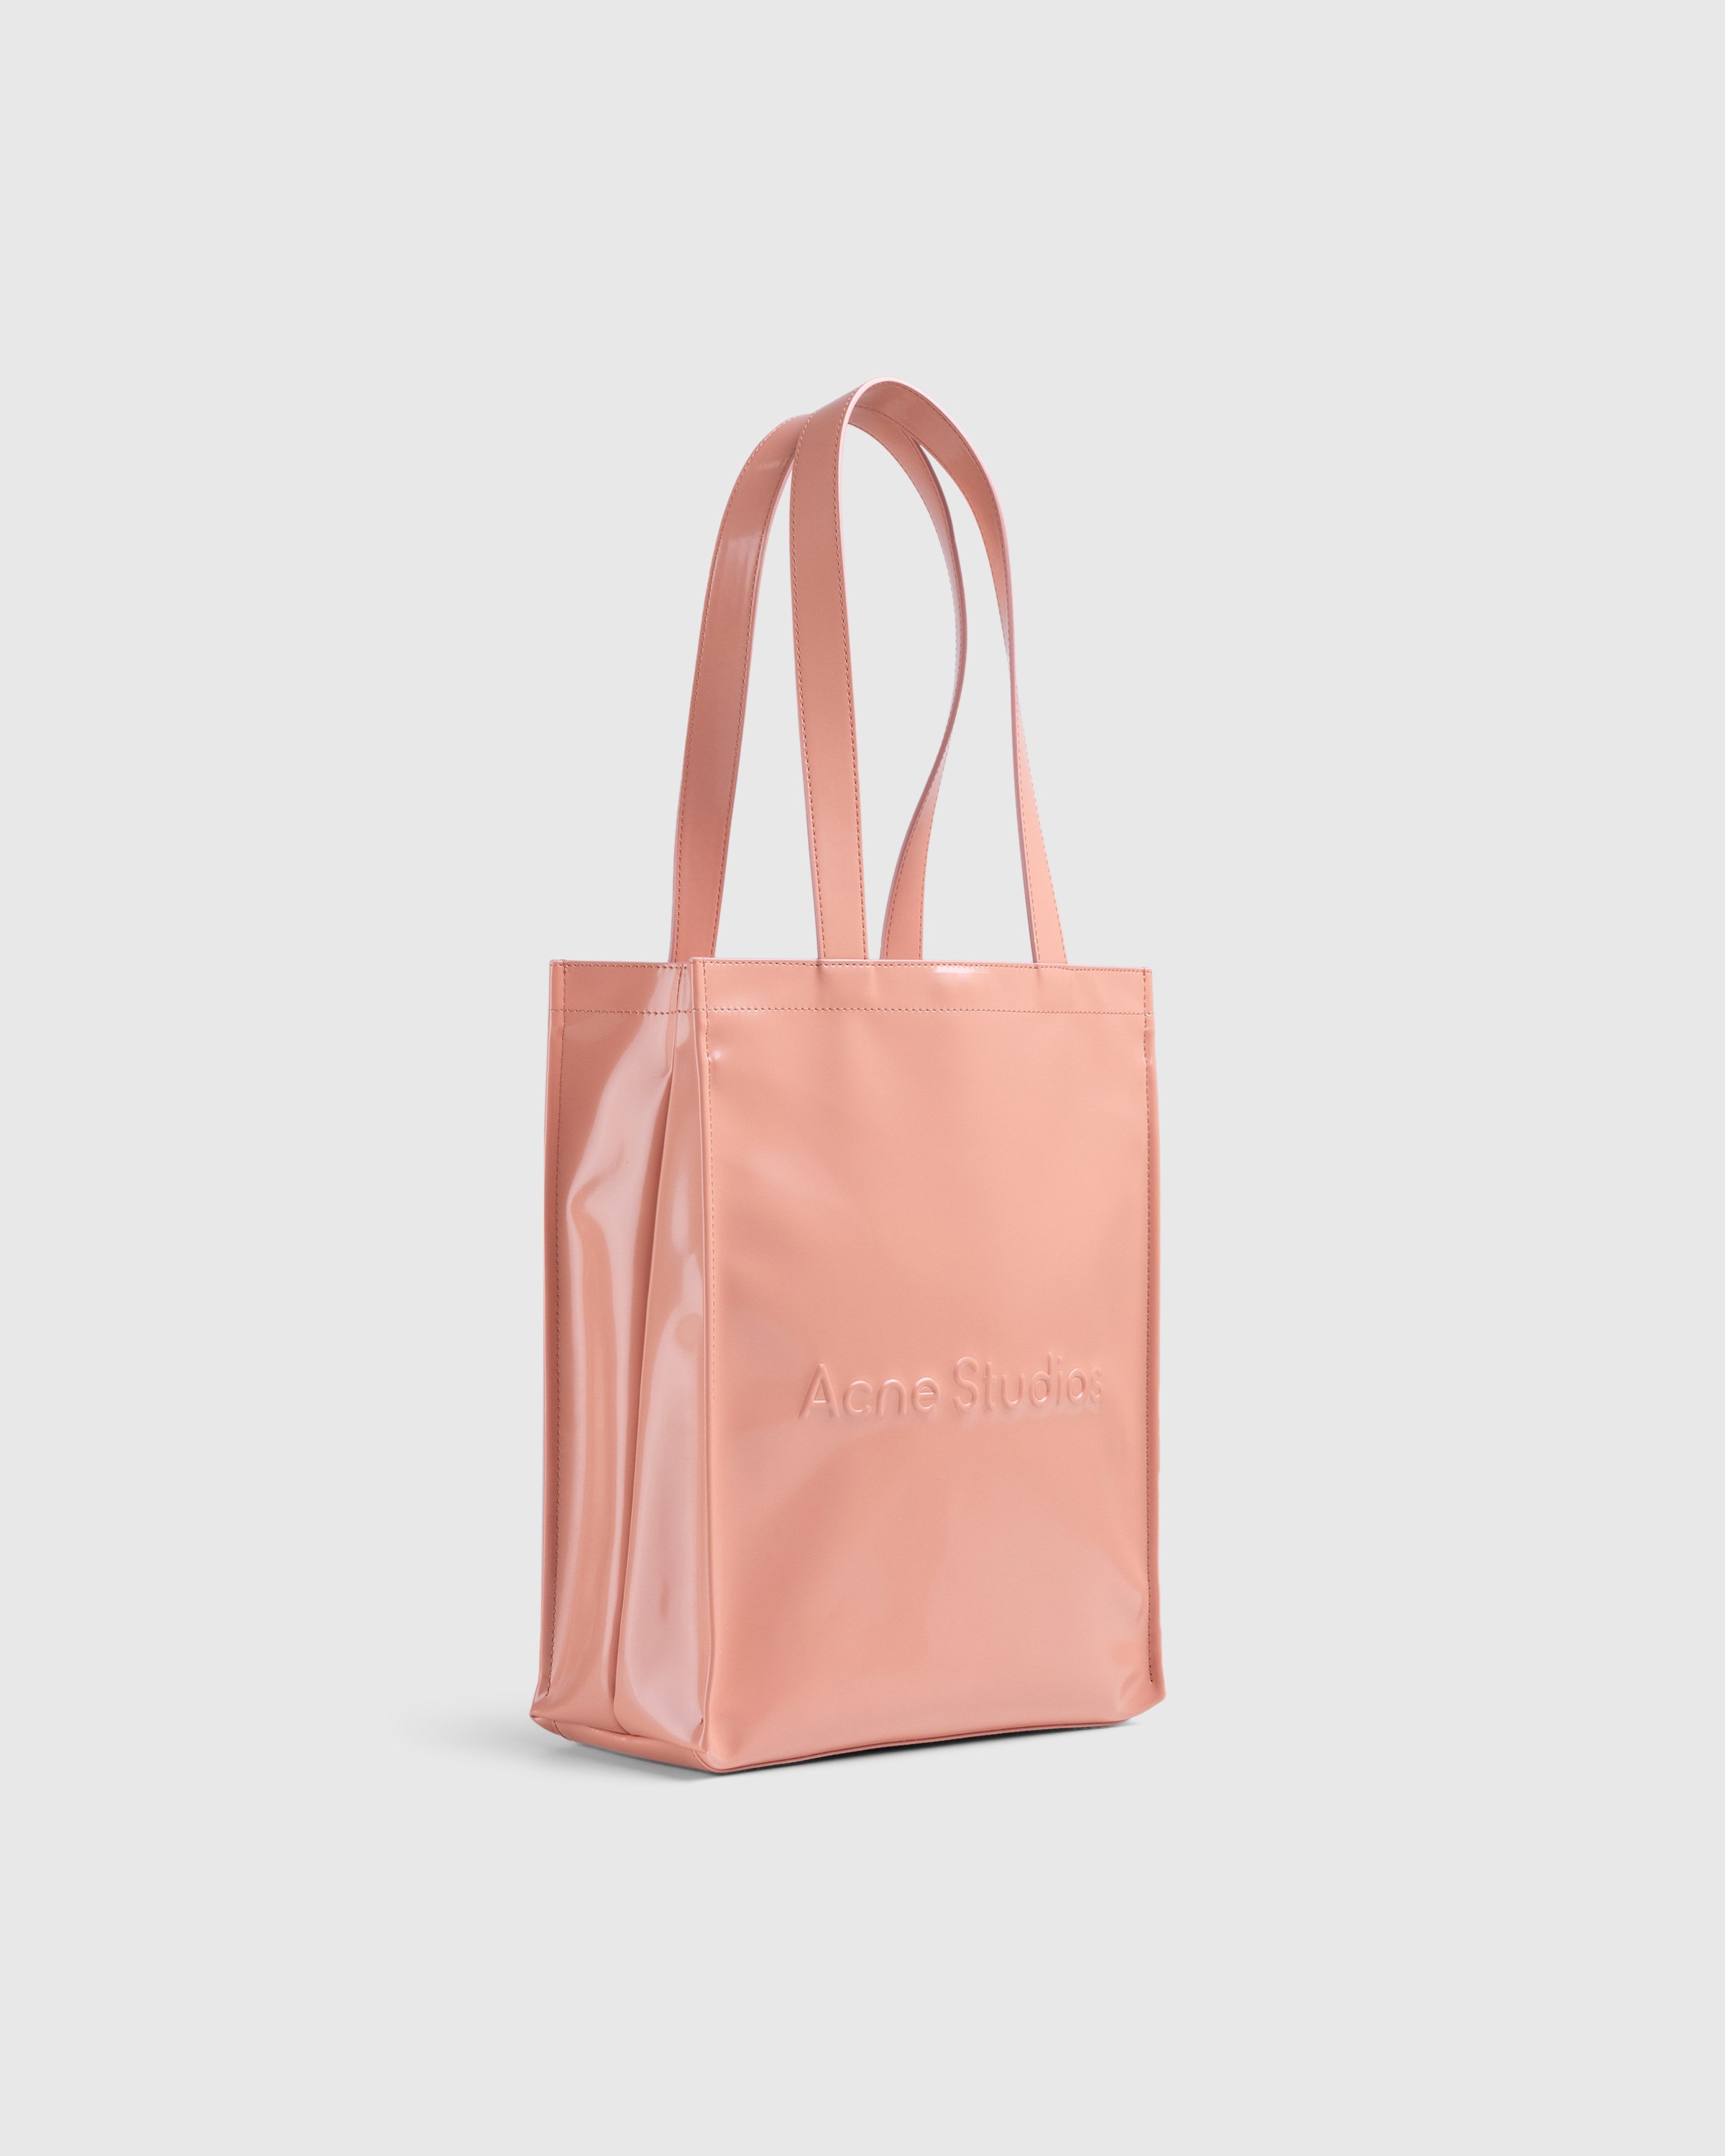 Acne Studios - Logo Shoulder Tote Bag Pink - Accessories - Pink - Image 3